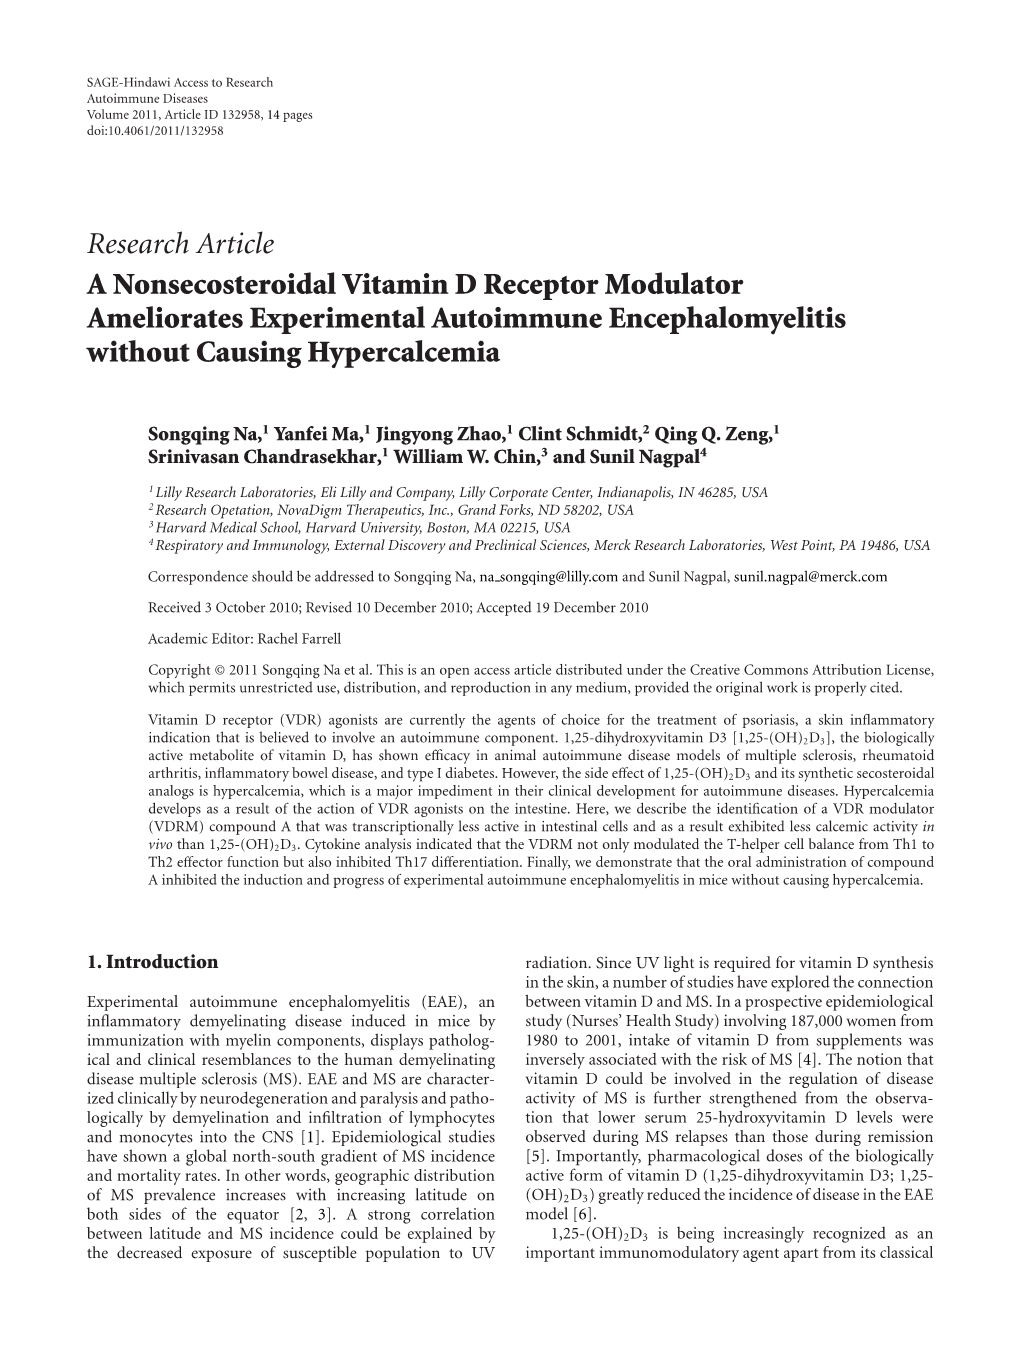 A Nonsecosteroidal Vitamin D Receptor Modulator Ameliorates Experimental Autoimmune Encephalomyelitis Without Causing Hypercalcemia